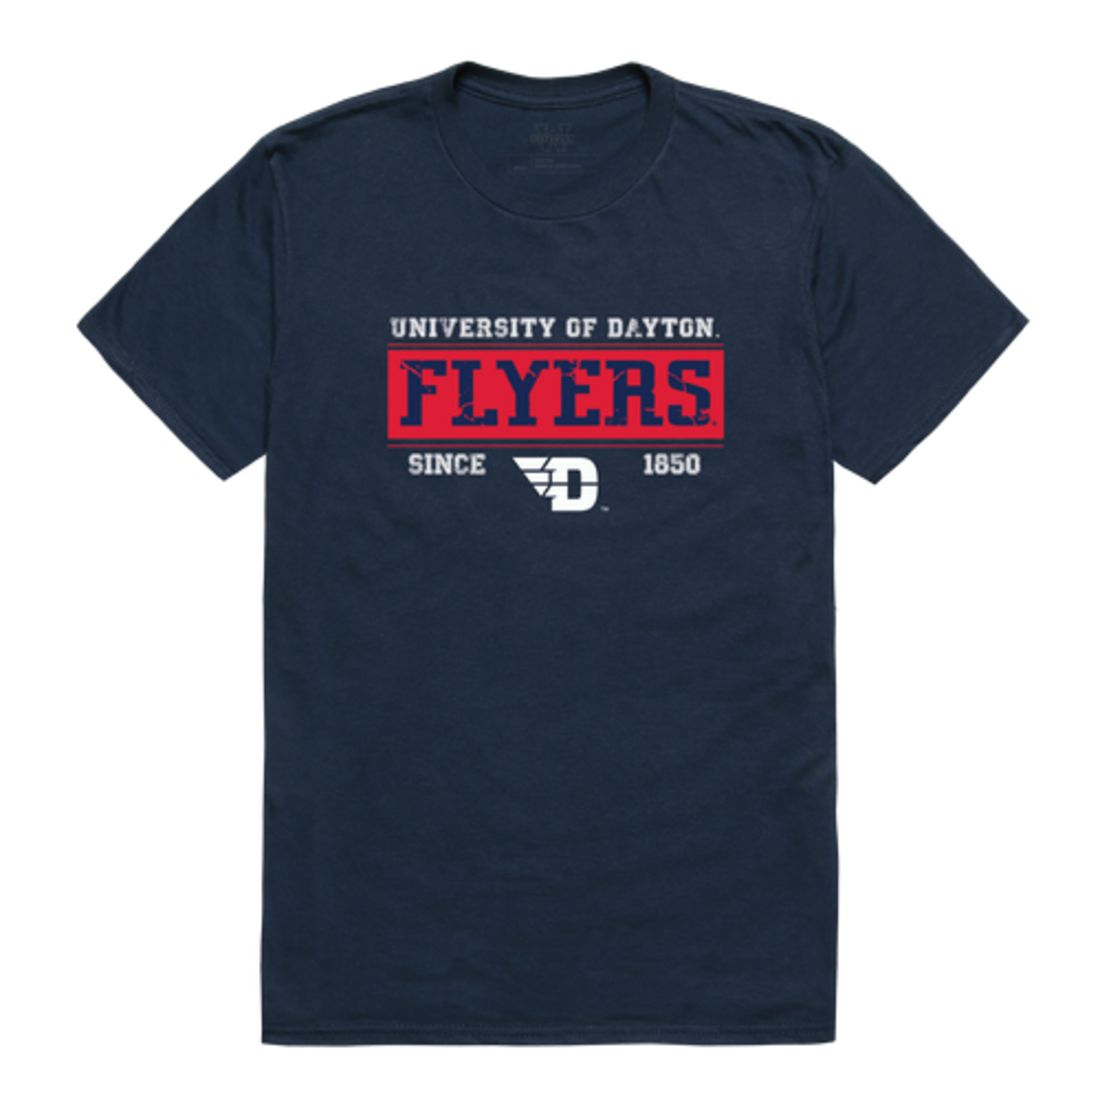 University of Dayton Flyers Established T-Shirt